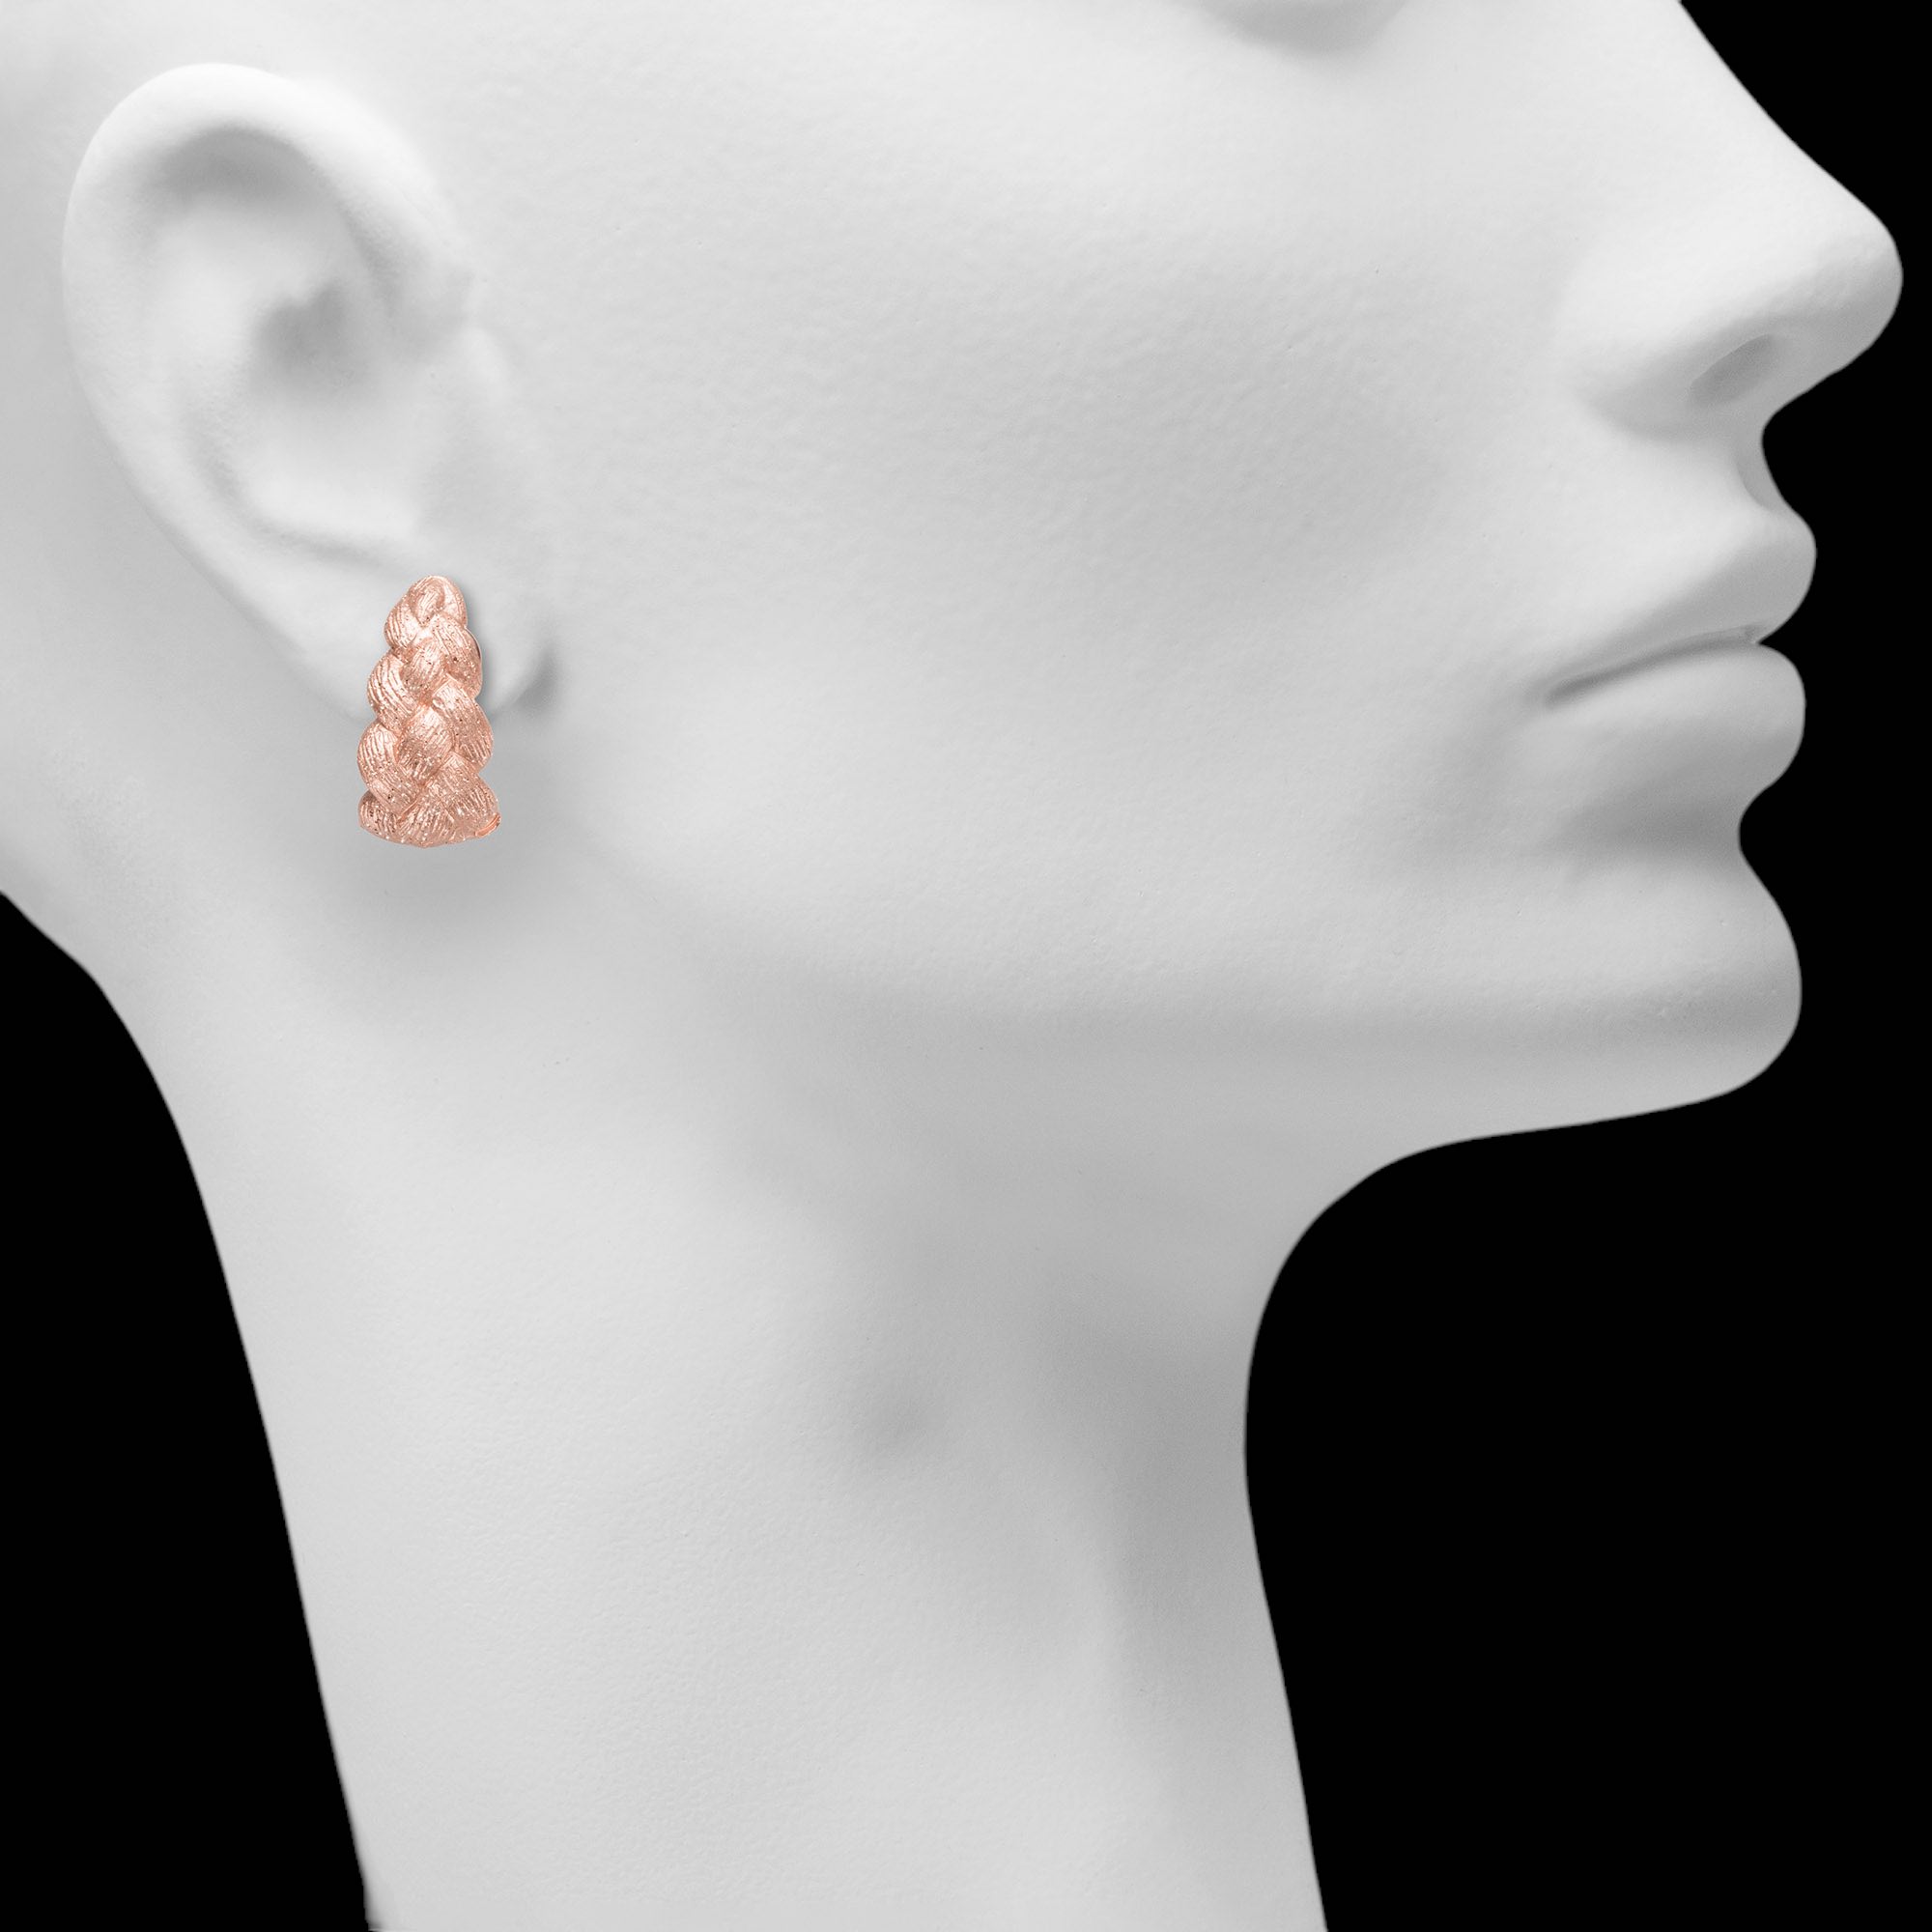 Beautiful rose and braided earrings